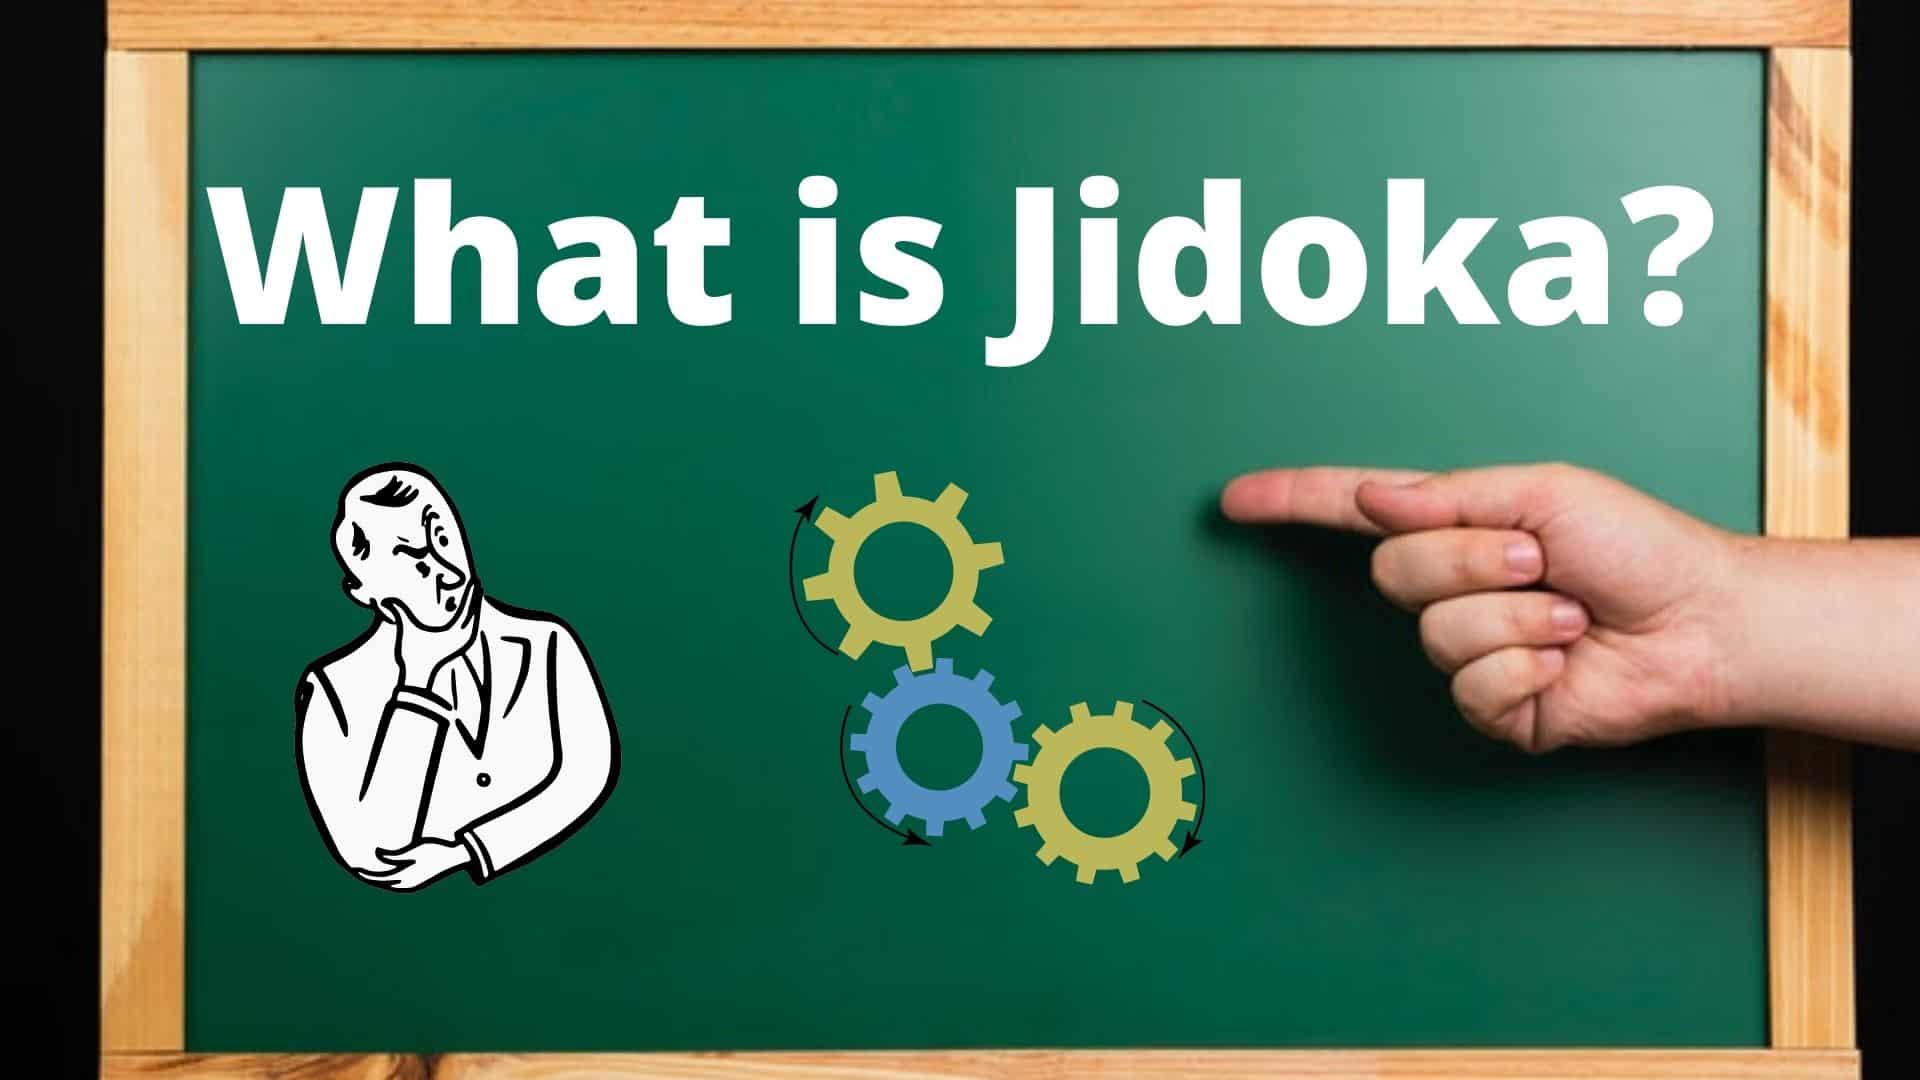 What is Jidoka in lean manufacturing?